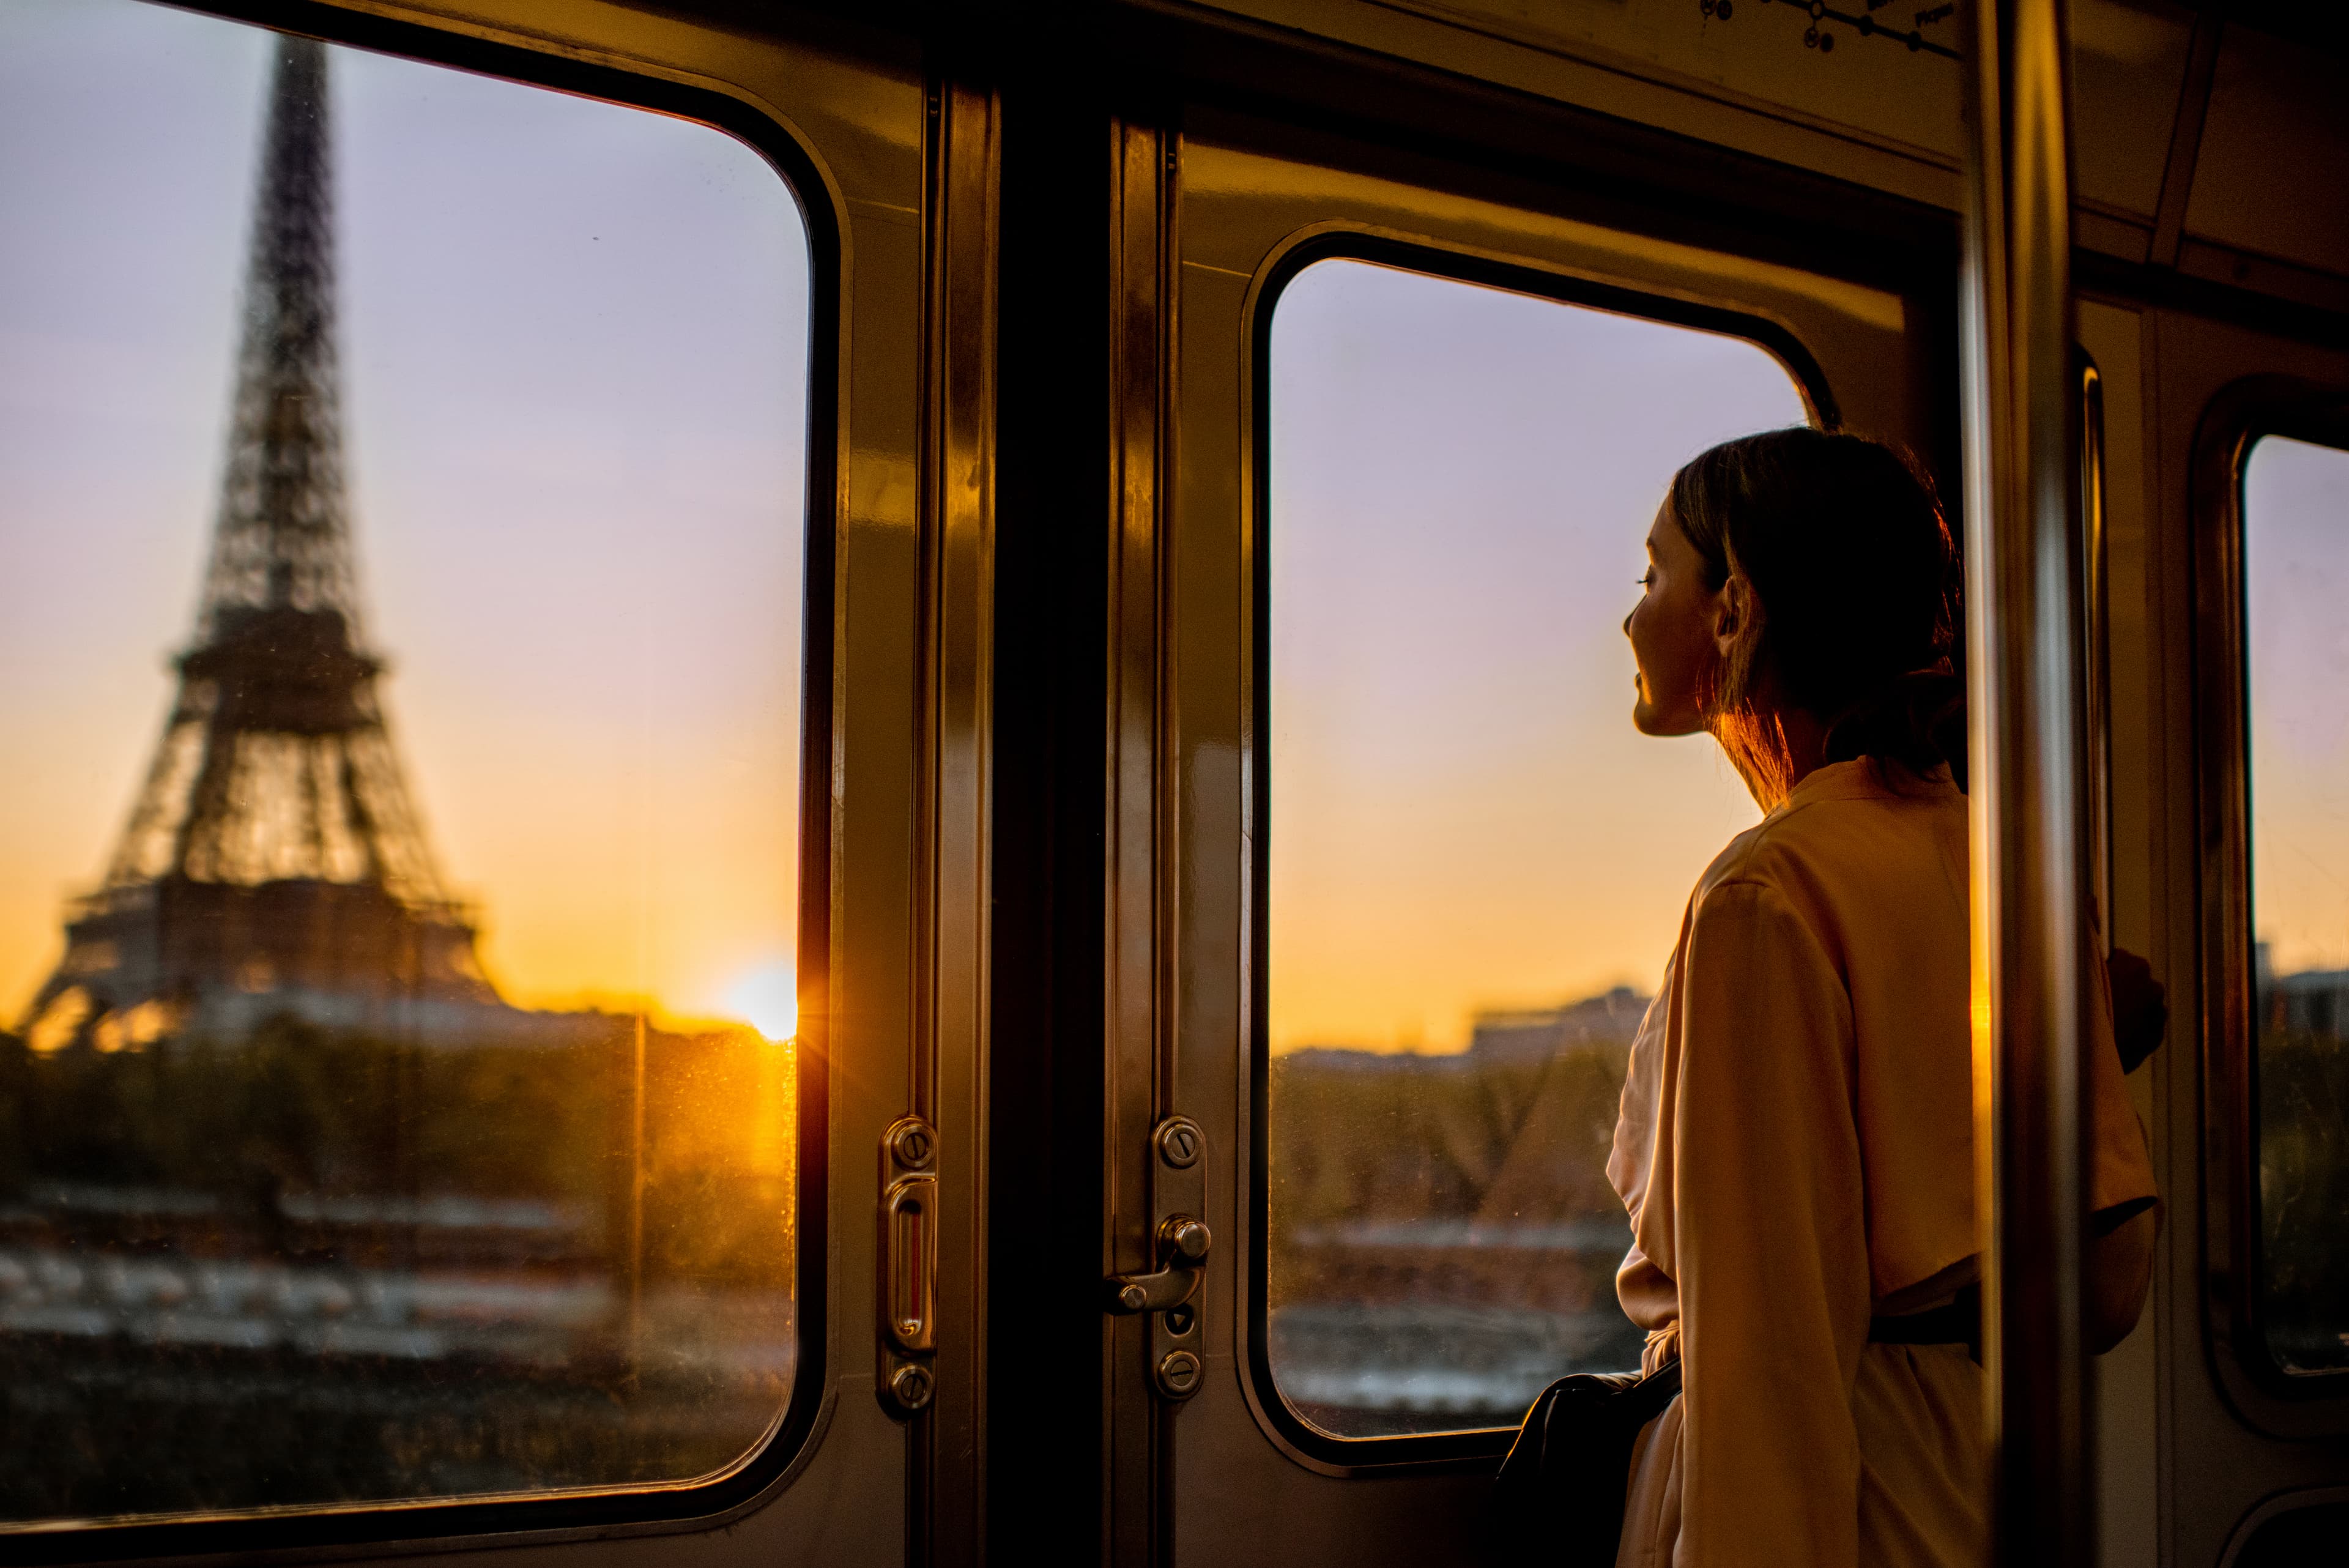 Woman riding the train in Paris